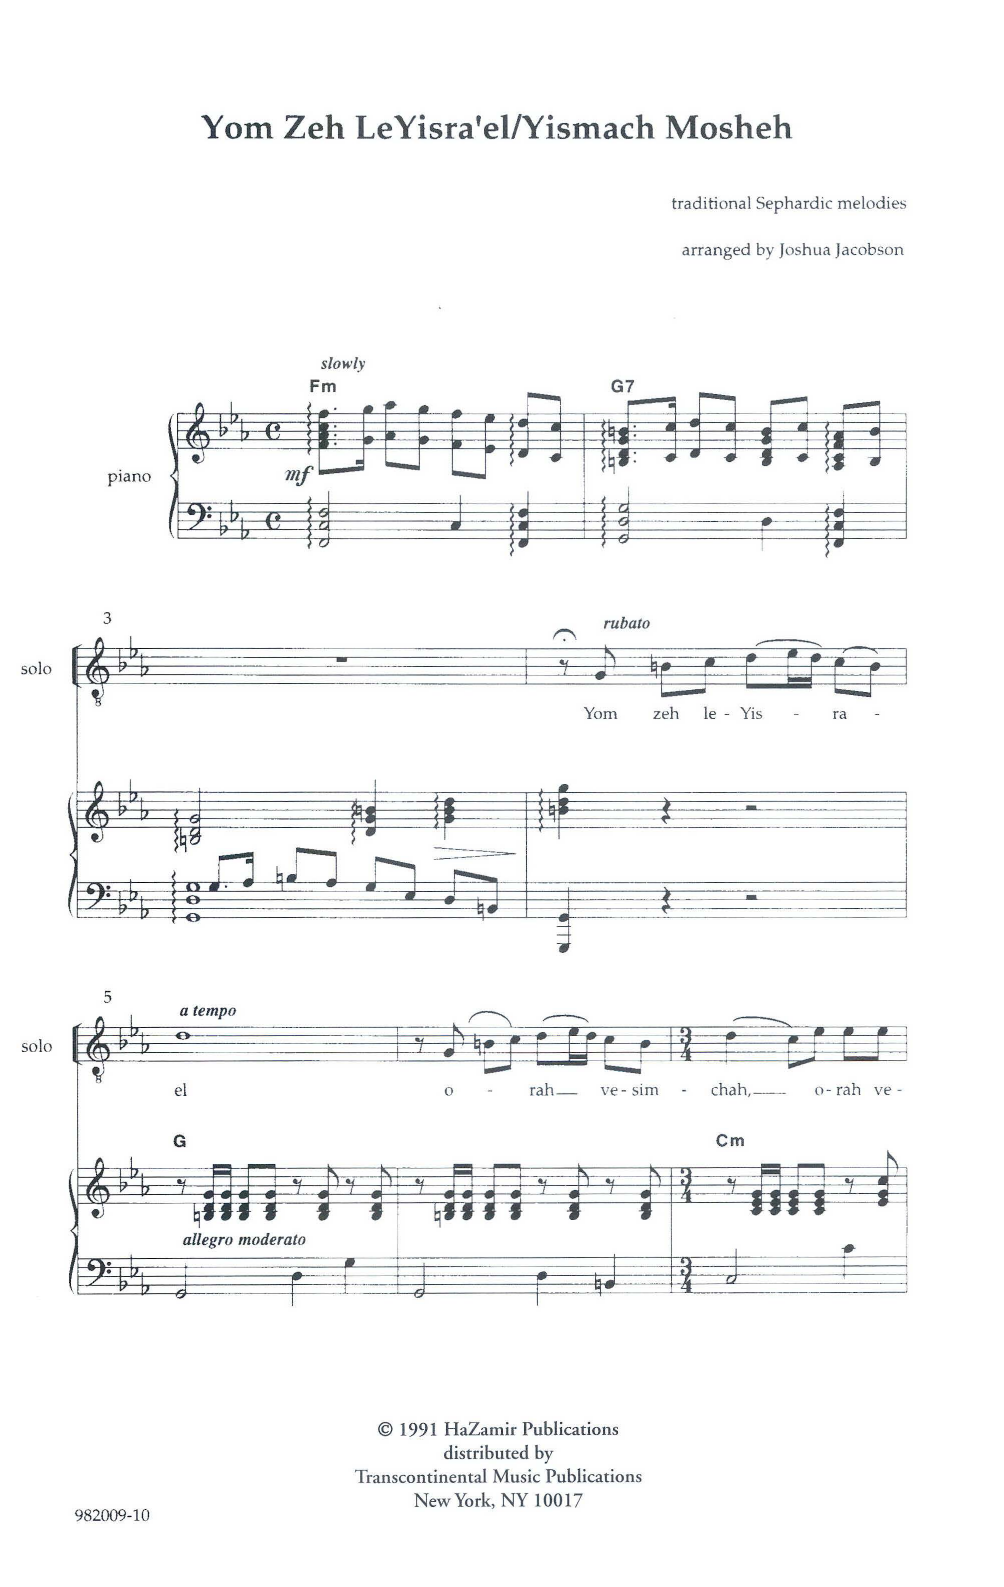 Joshua Jacobson Yom Zeh LeYisra'el/Yismach Mosheh Sheet Music Notes & Chords for Unison Choral - Download or Print PDF